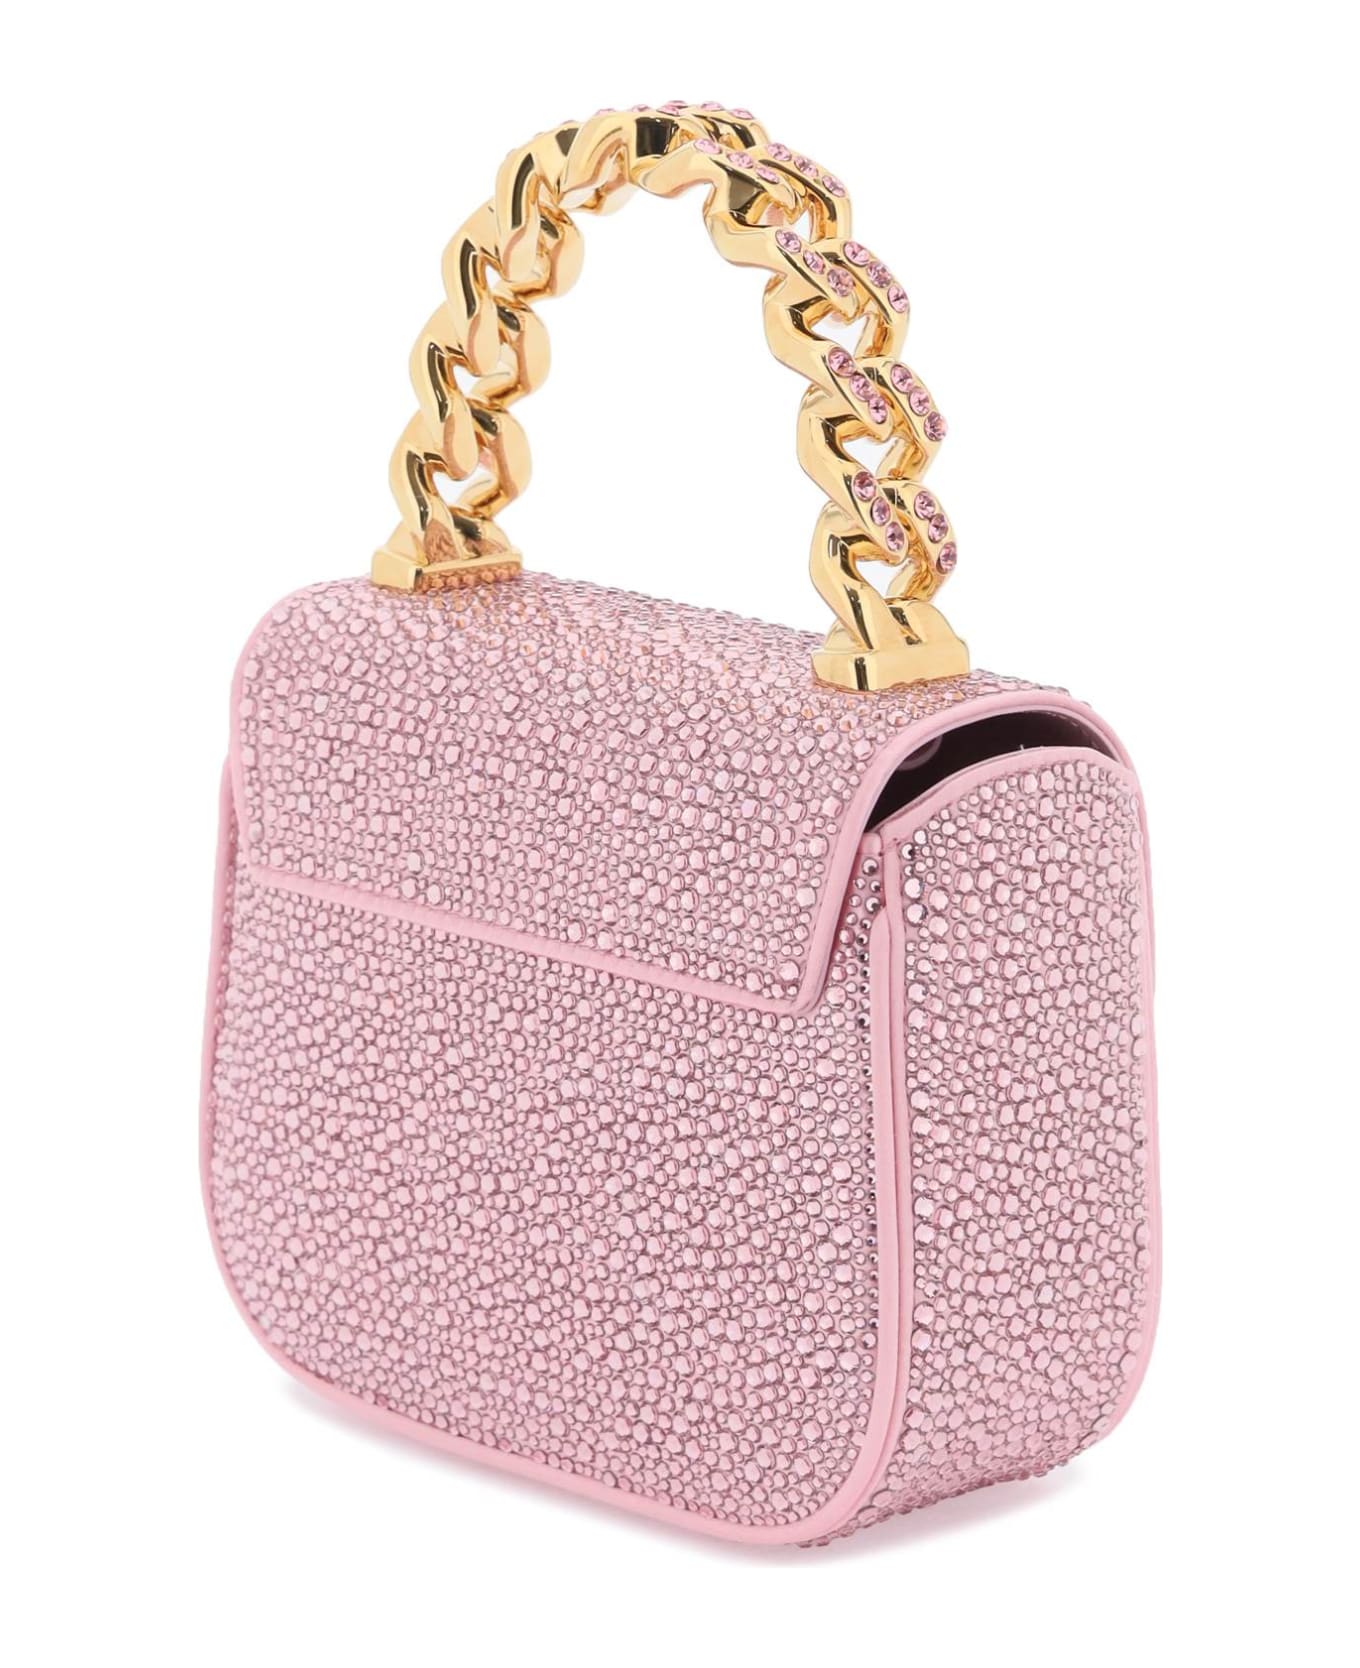 Versace La Medusa Handbag With Crystals - PALE PINK VERSACE GOLD (Pink) トートバッグ